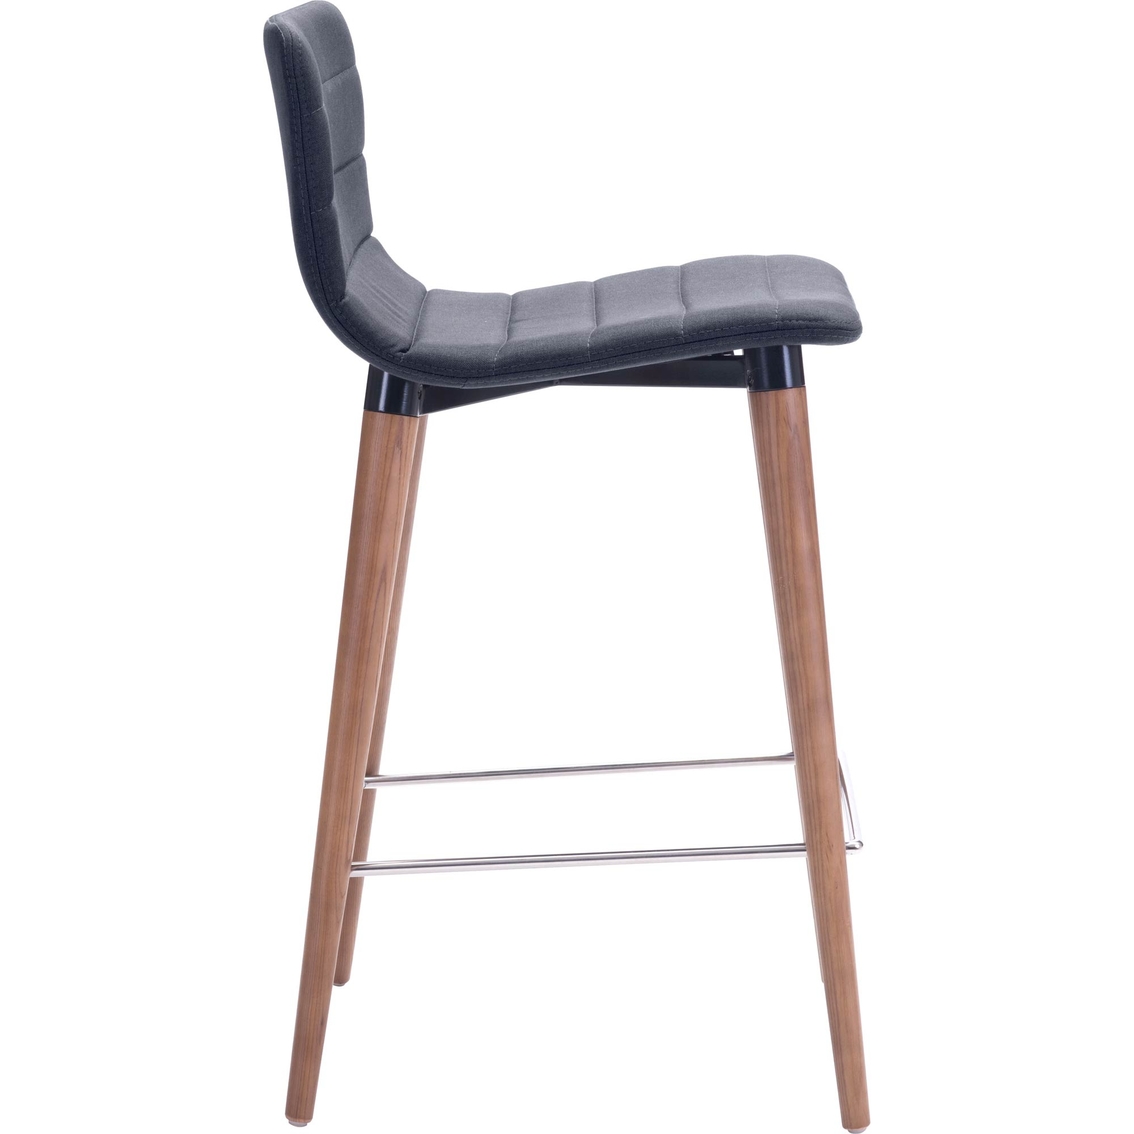 Zuo Modern Jericho Counter Chair 2 Pk. - Image 2 of 4